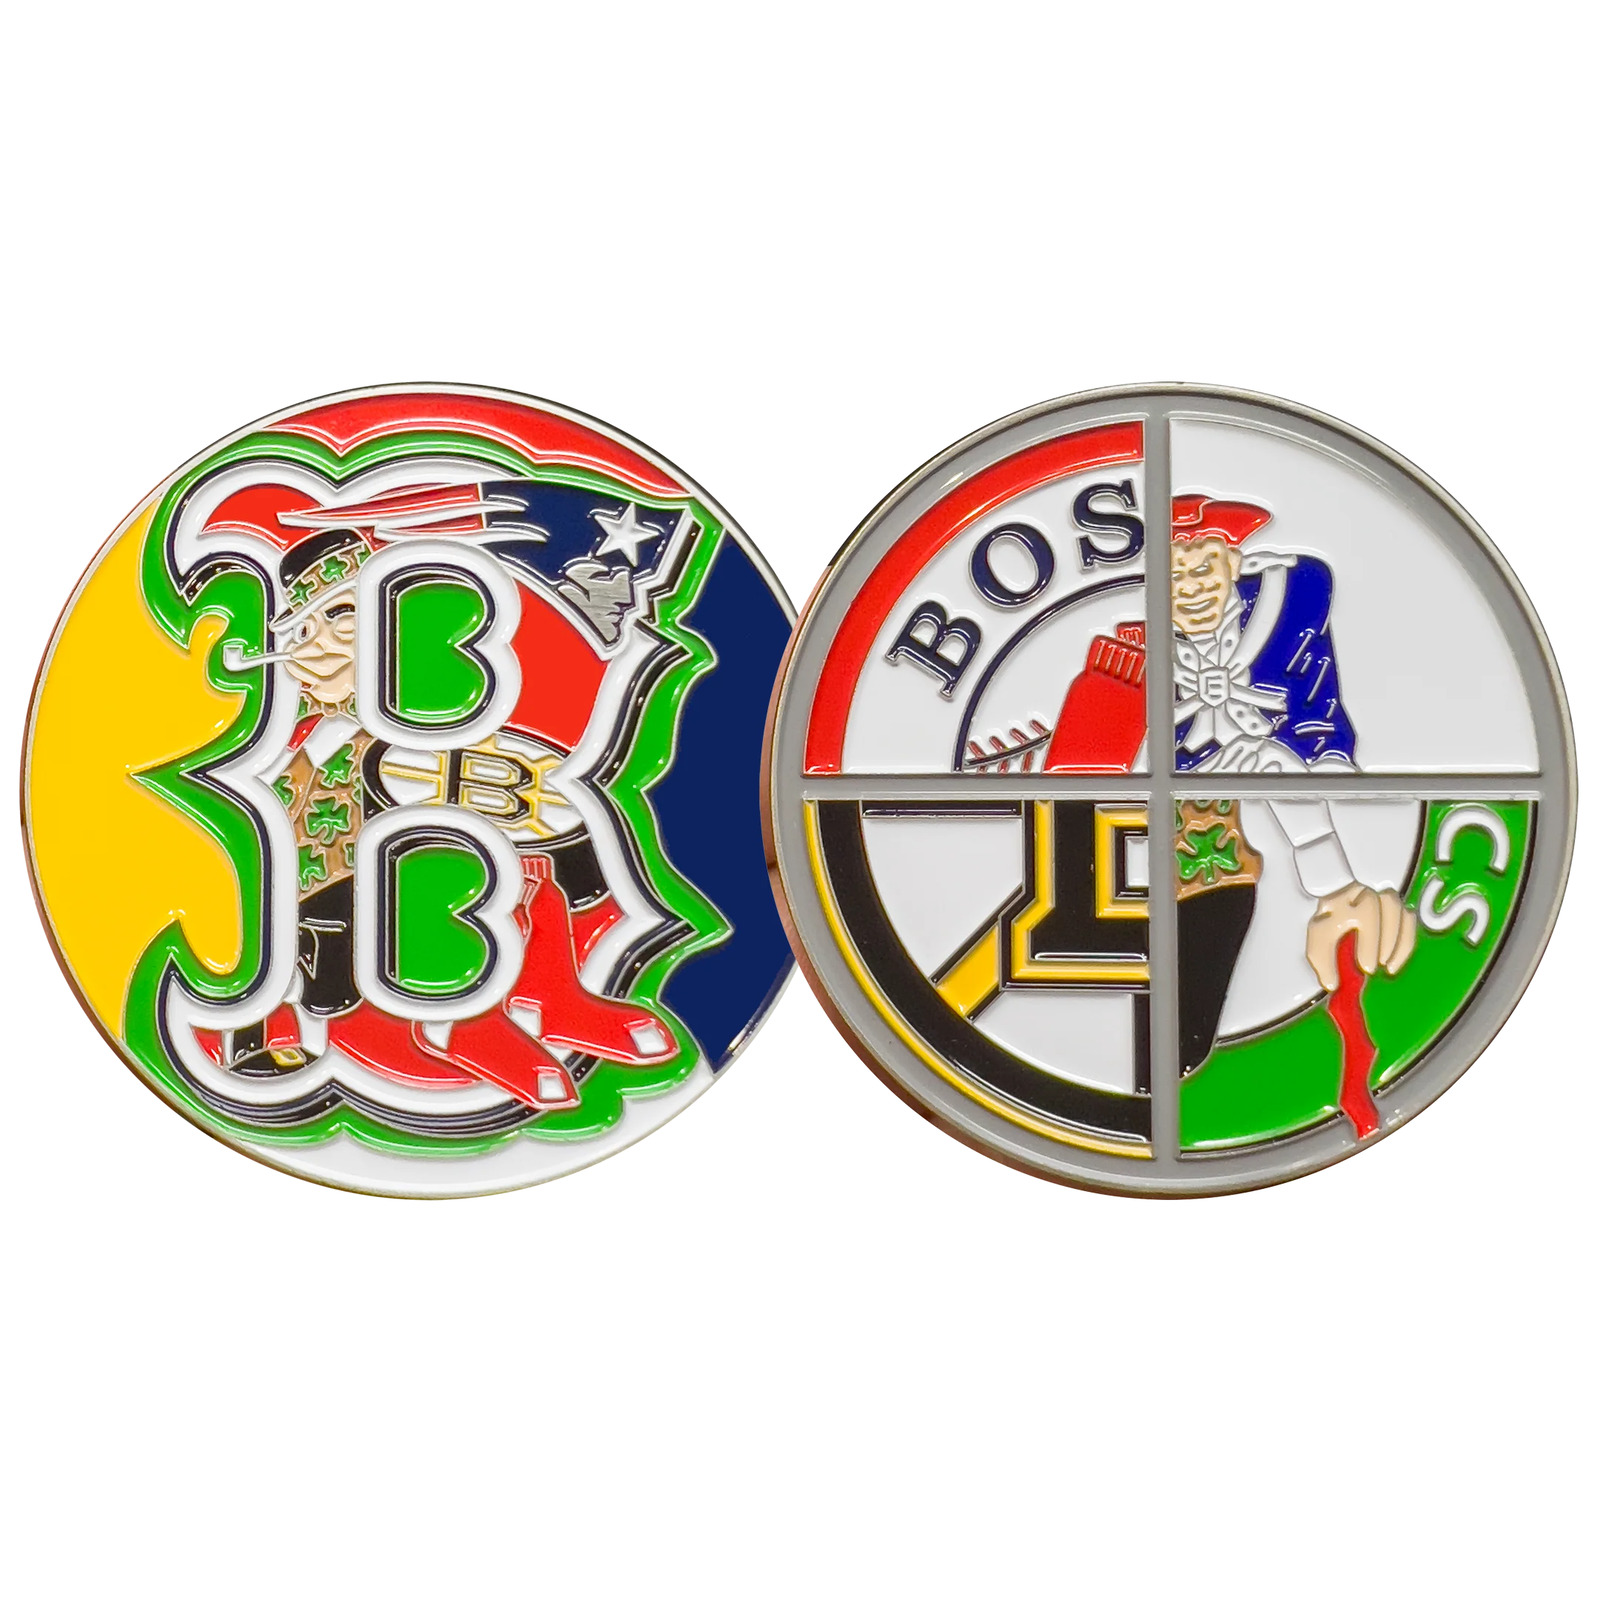 GL10-004 Boston Police Massachusetts State Trooper Sports Challenge Coin